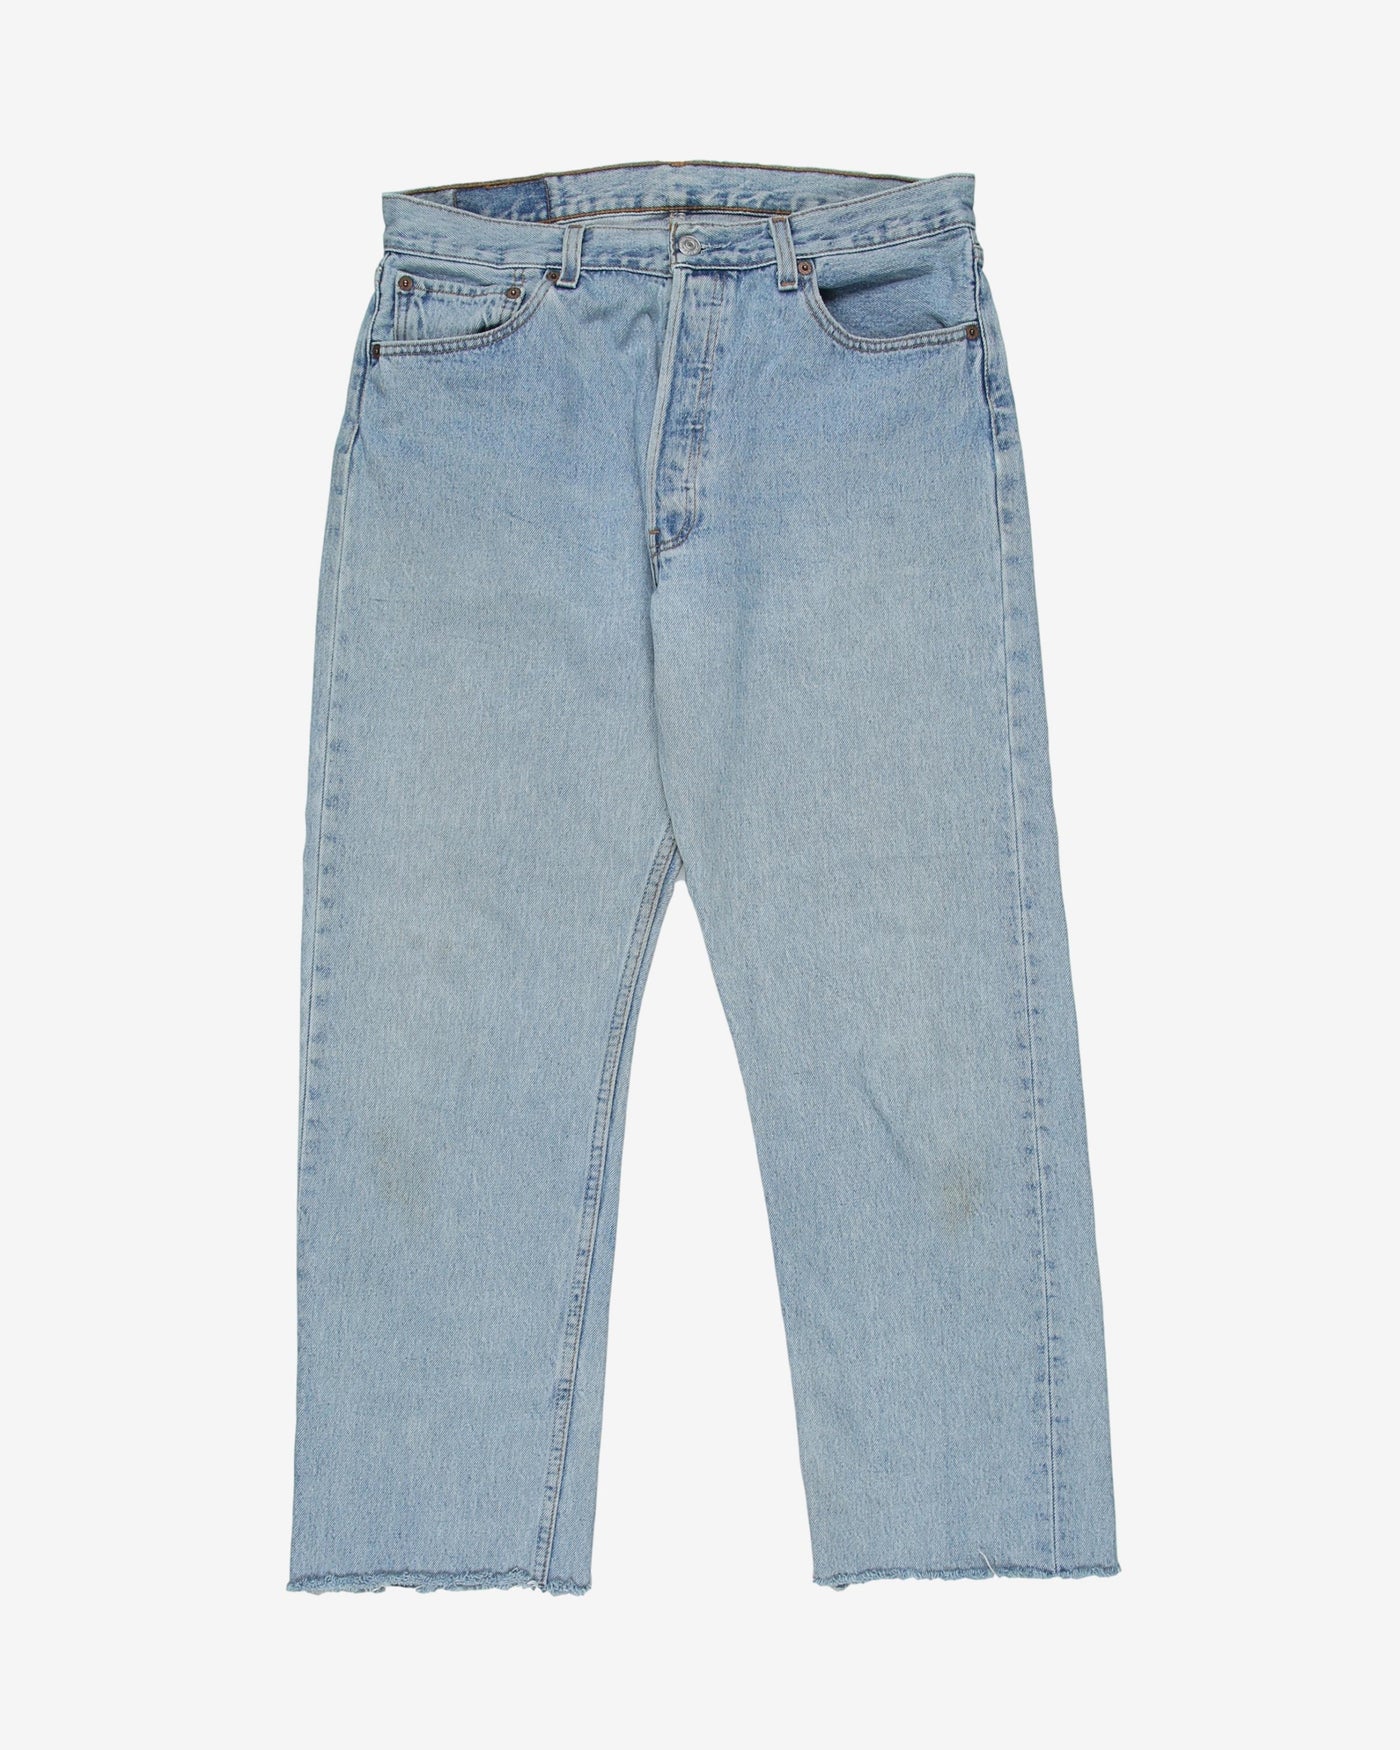 Levis 501 light wash blue cropped jeans - w34l29